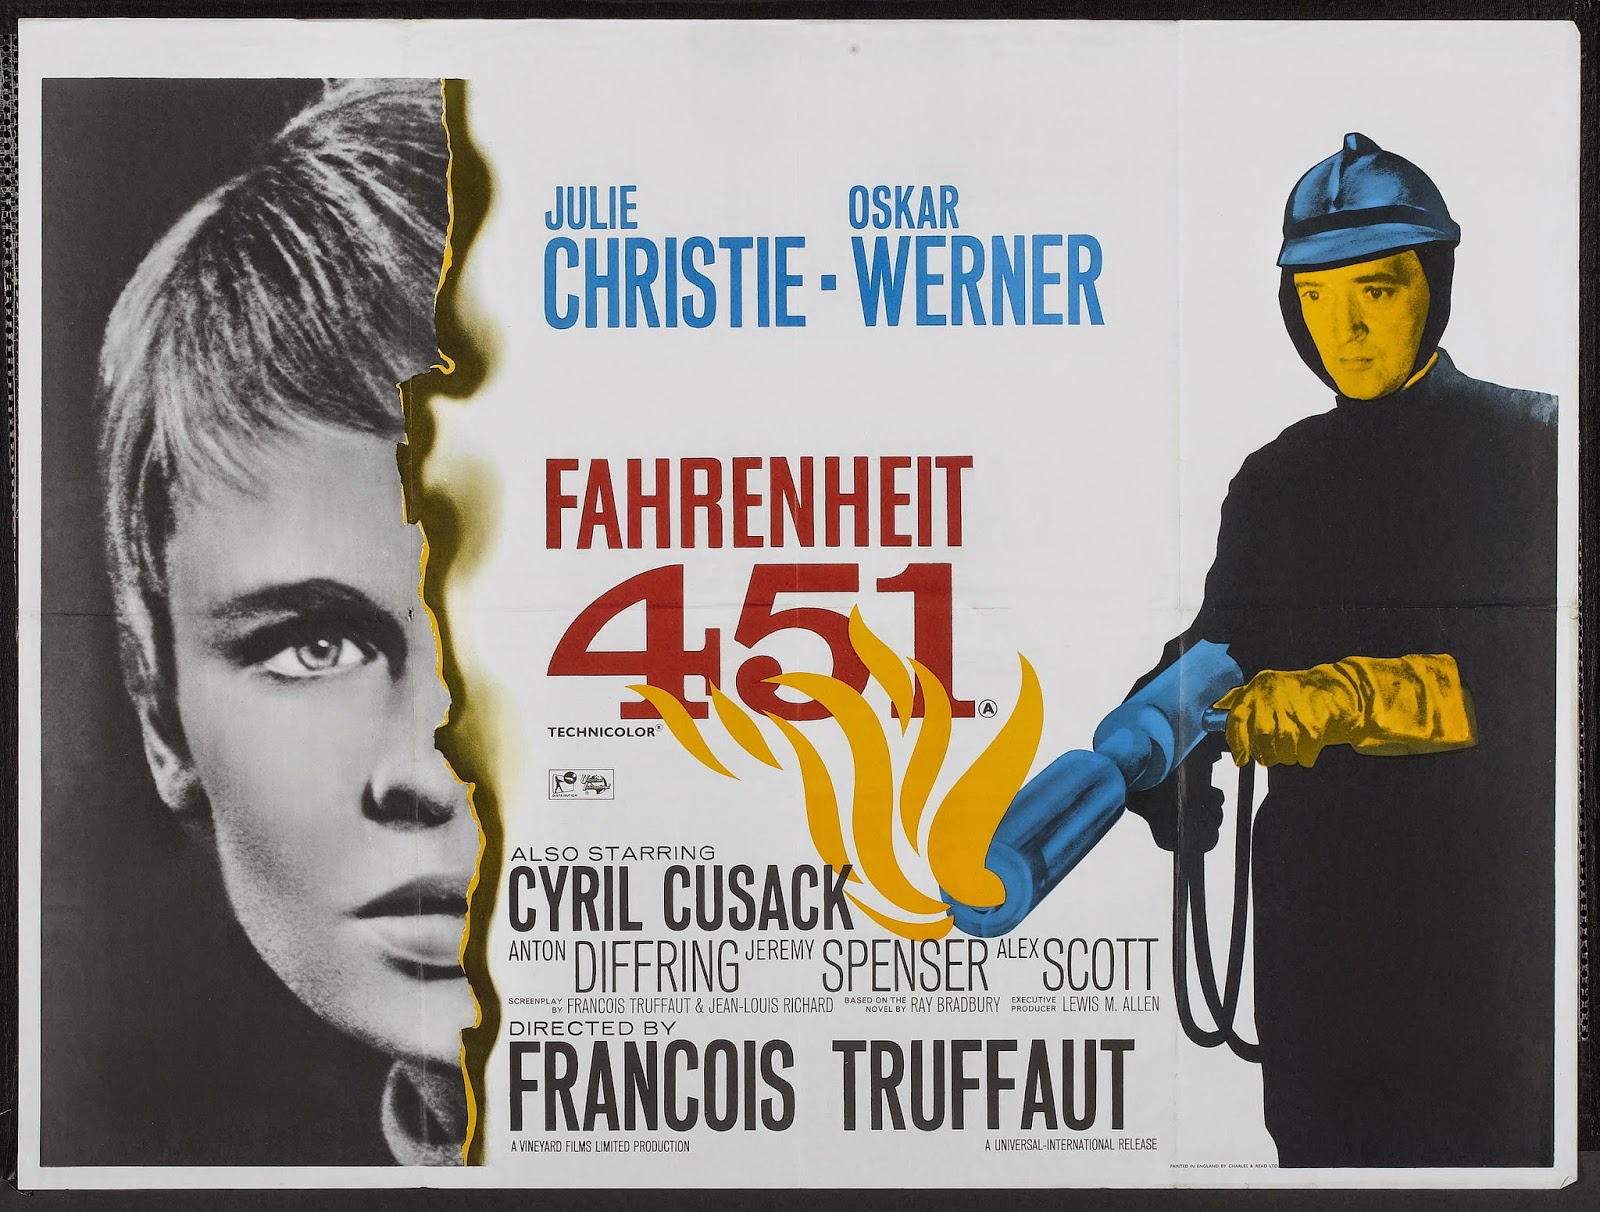  Fahrenheit 451 [Blu-ray] : Oskar Werner, Julie